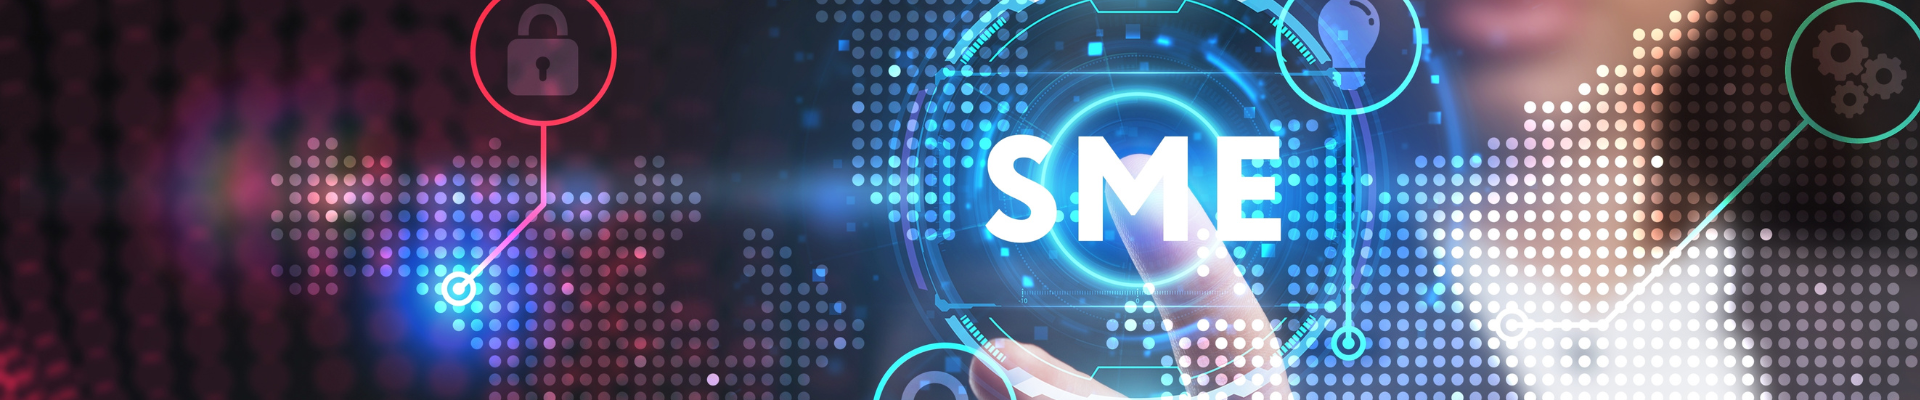 sme hub small medium enterprise banner image